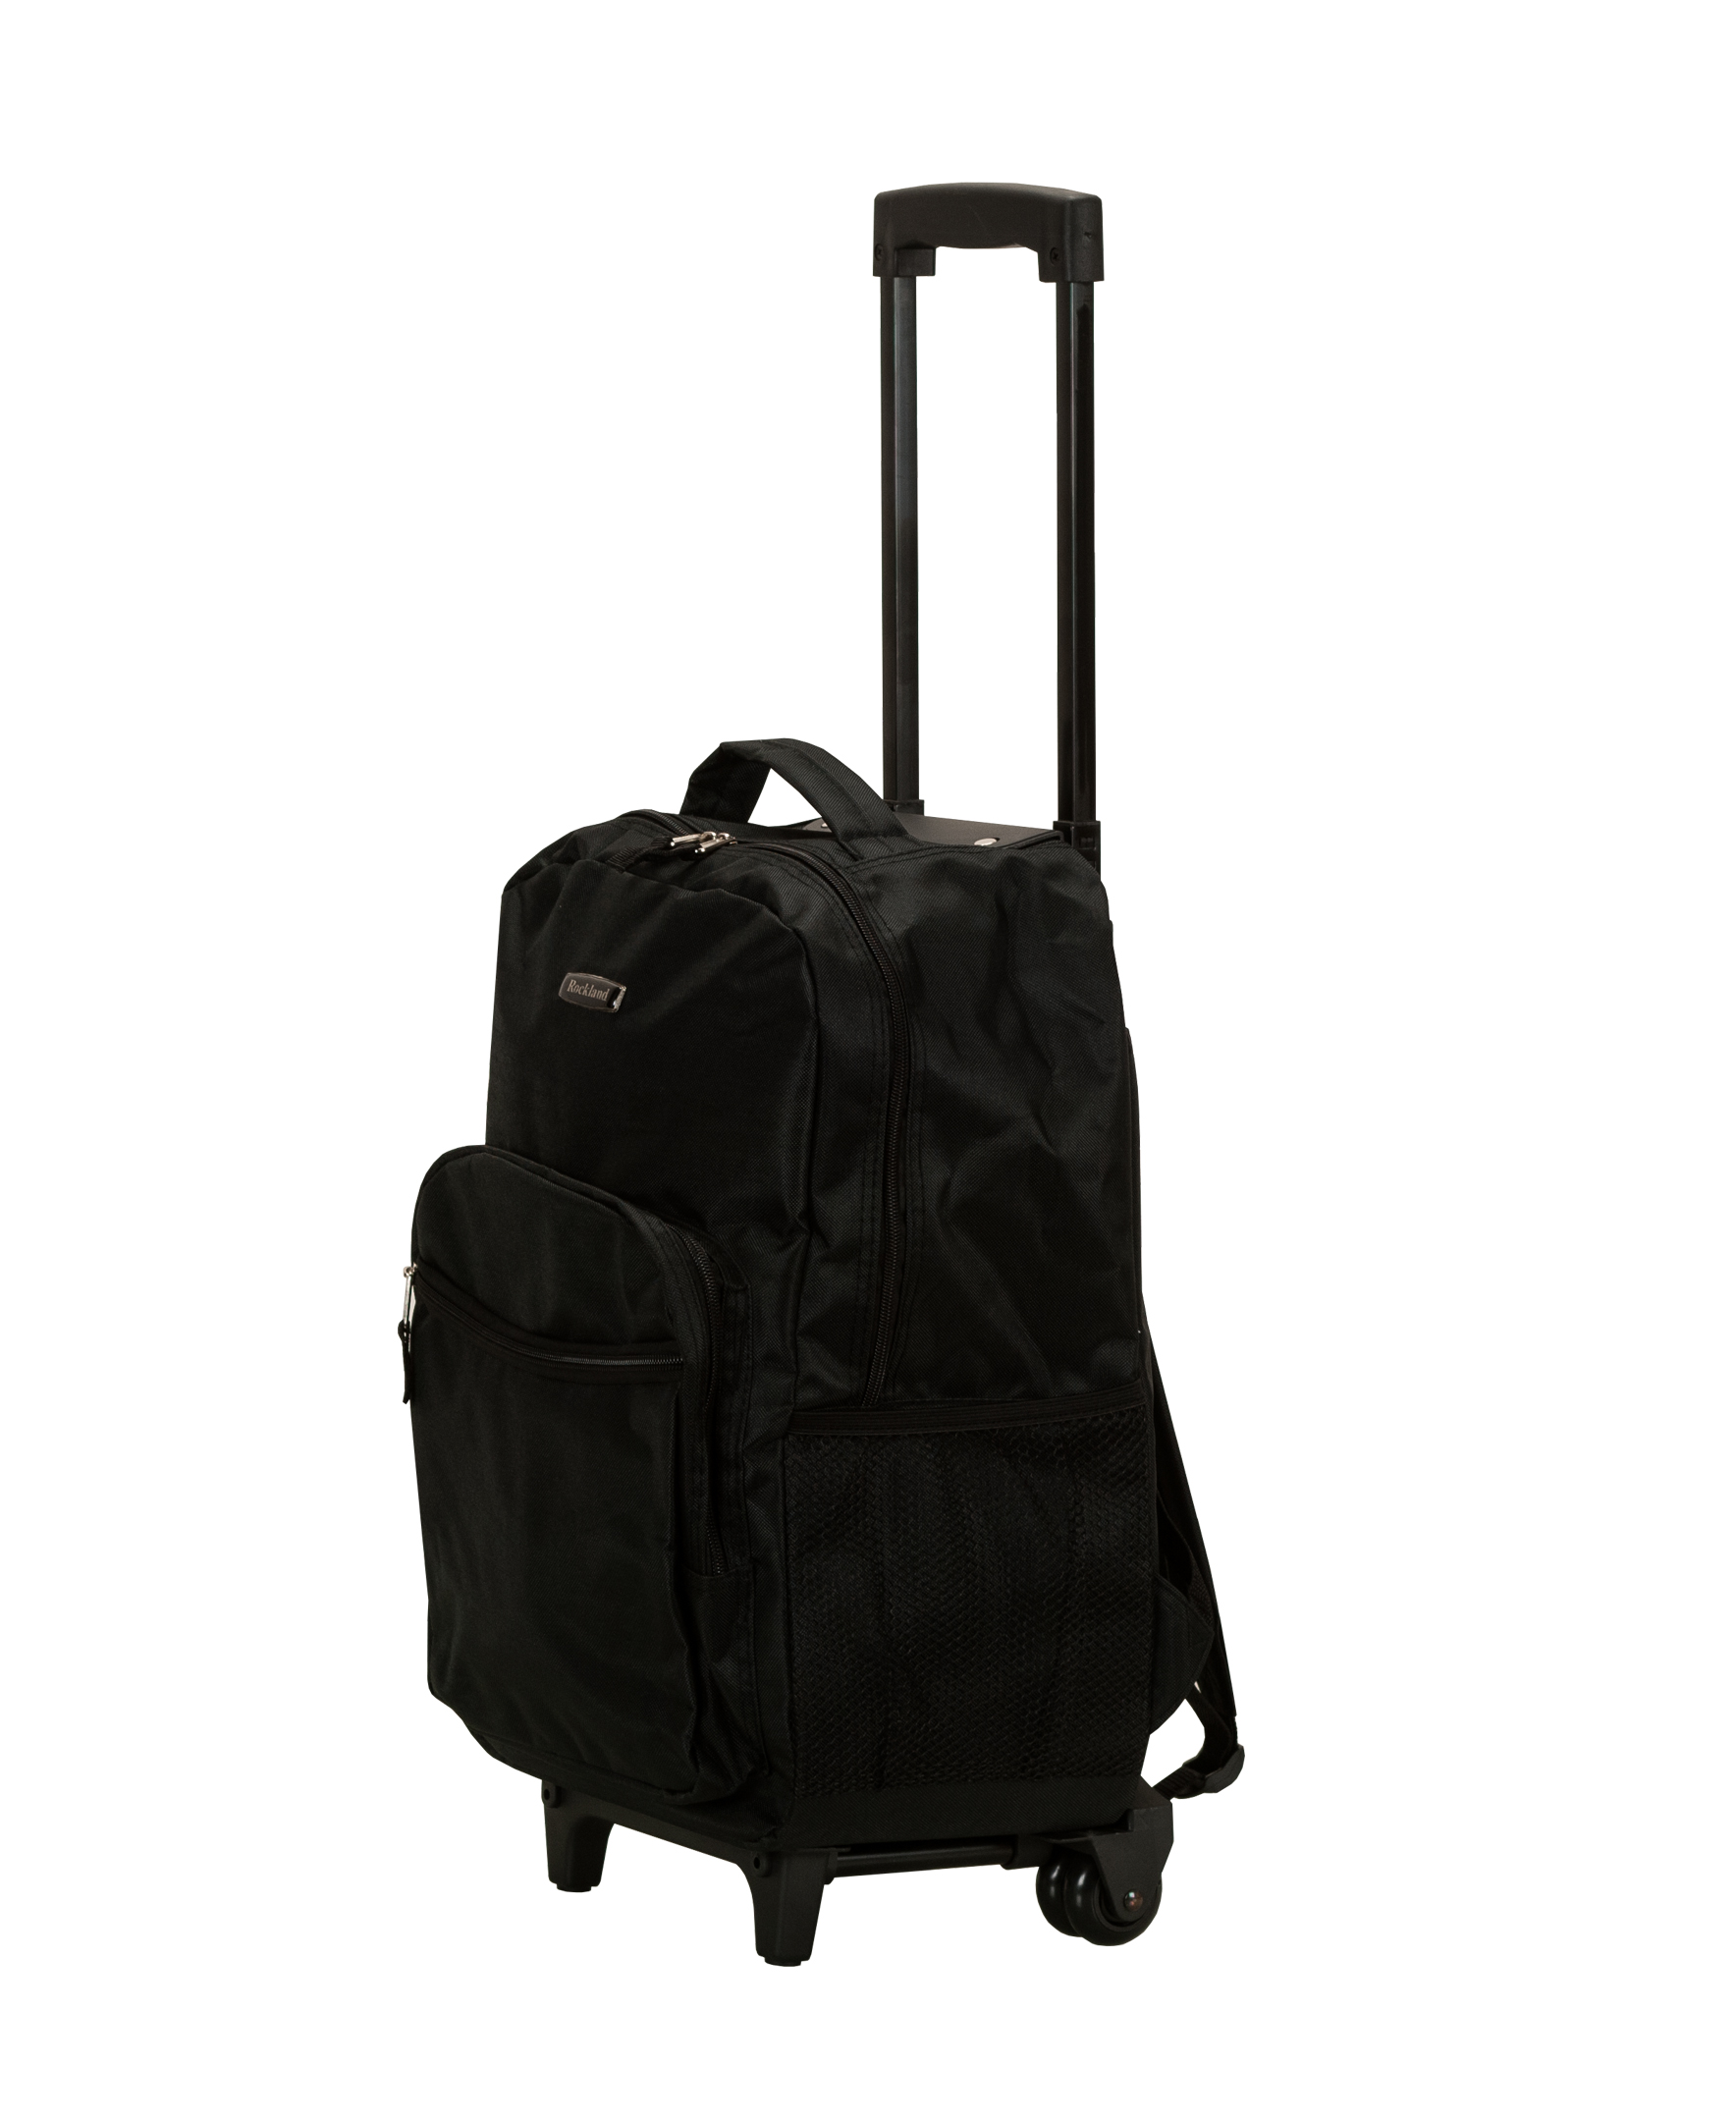 Rockland Unisex Luggage 17" Rolling Backpack R01 Black - image 2 of 4